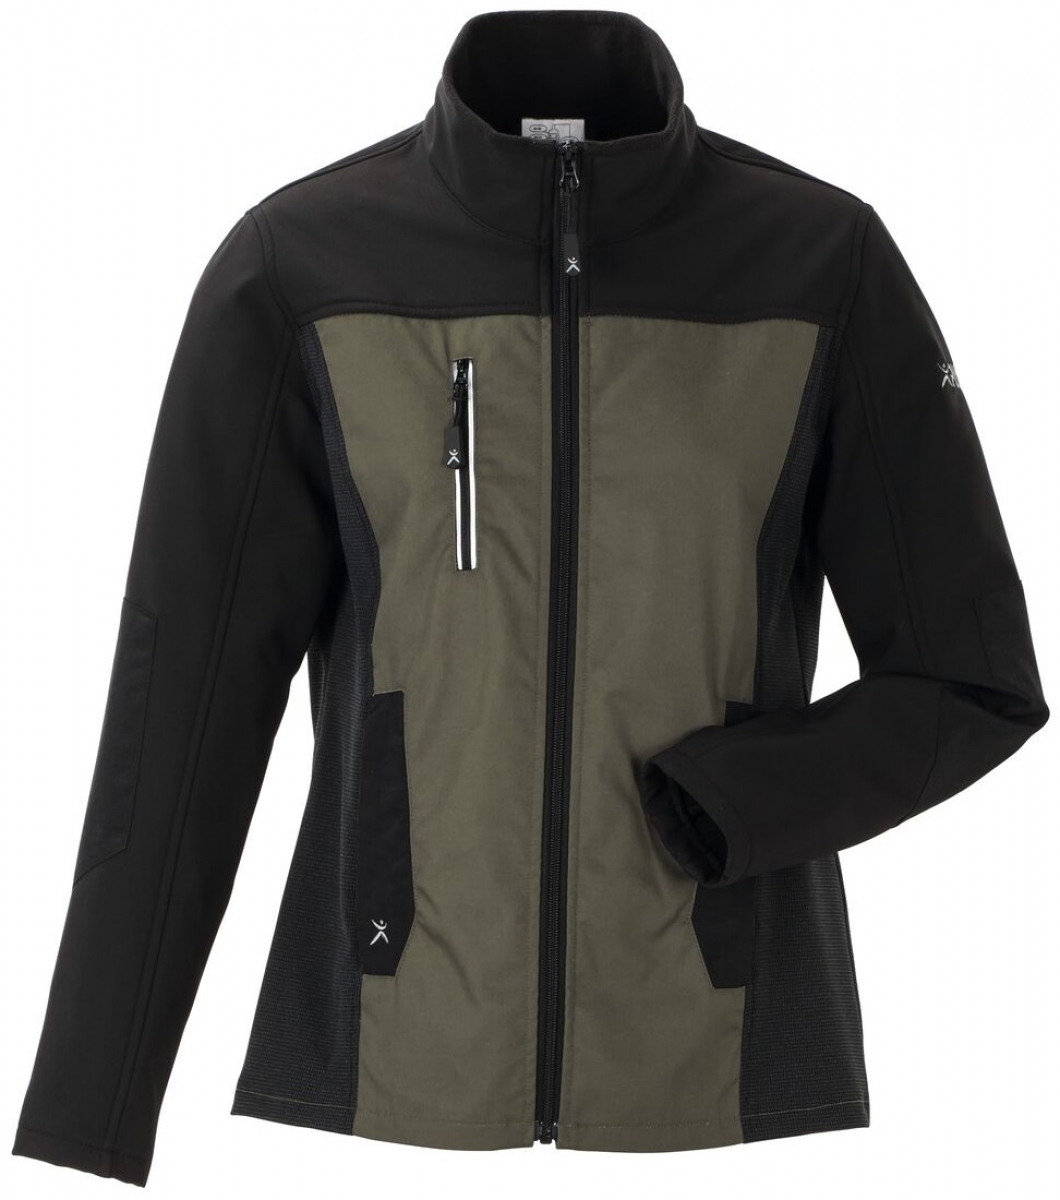 PLANAM-Workwear, Damen-Hybridjacke, Norit, 245 g/m, oliv/schwarz